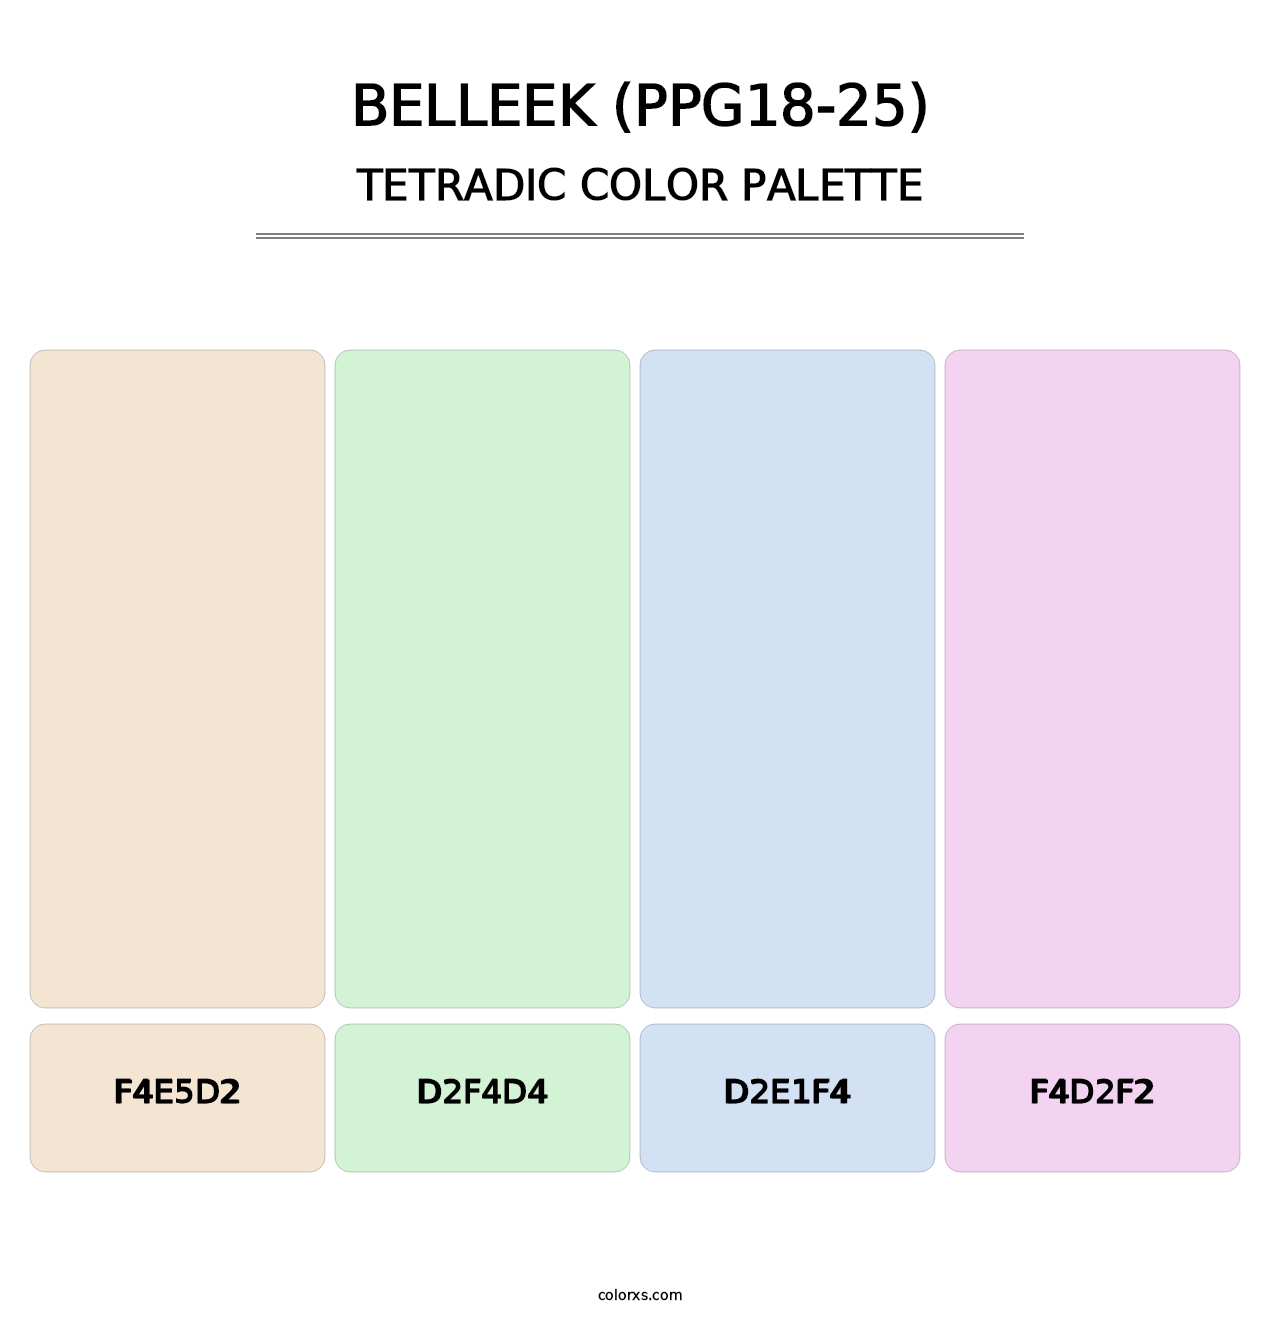 Belleek (PPG18-25) - Tetradic Color Palette